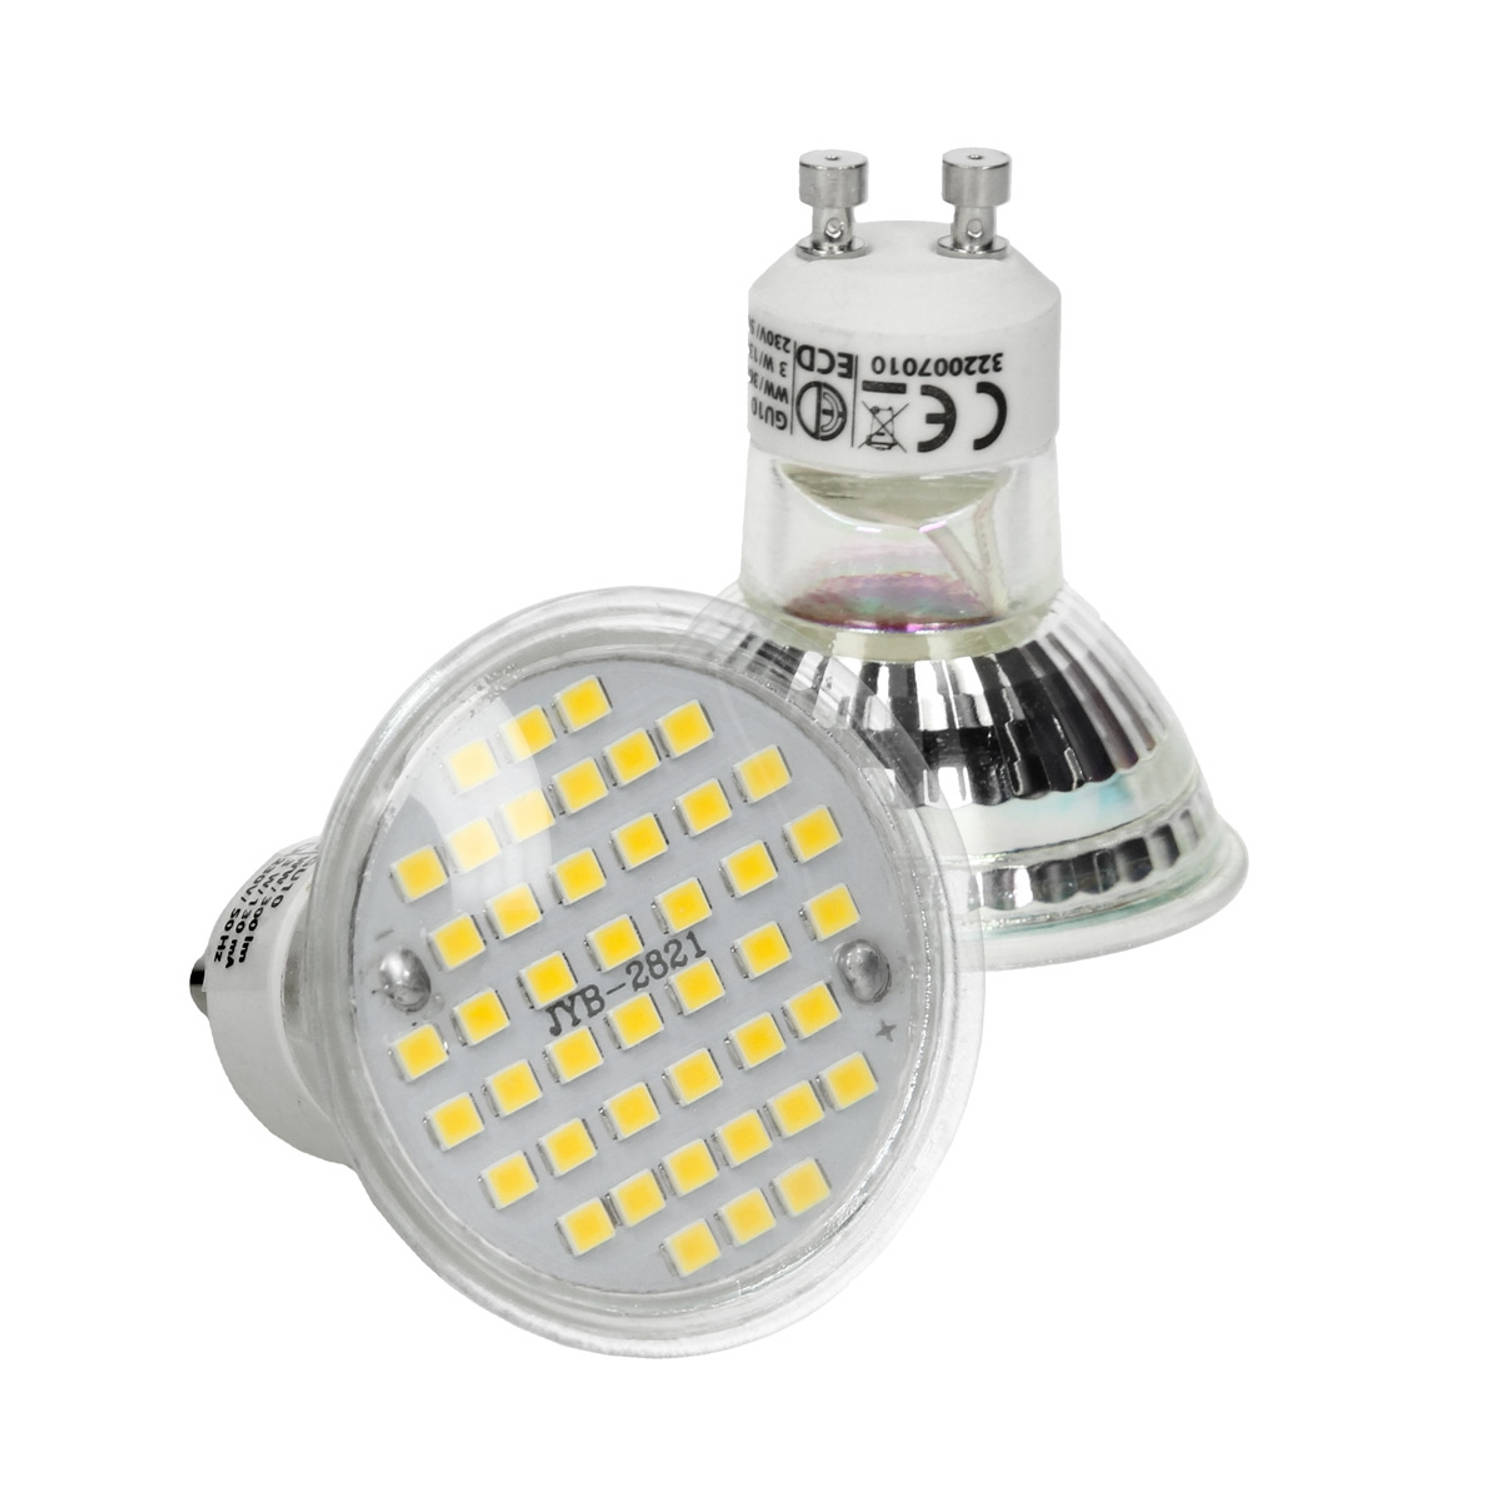 ECD Germany 20er Set LED-lamp GU10 44SMD Spot 3W - vervangen van 20W-lamp - gemaakt van glas - 251 lumen - warmwit 3000K